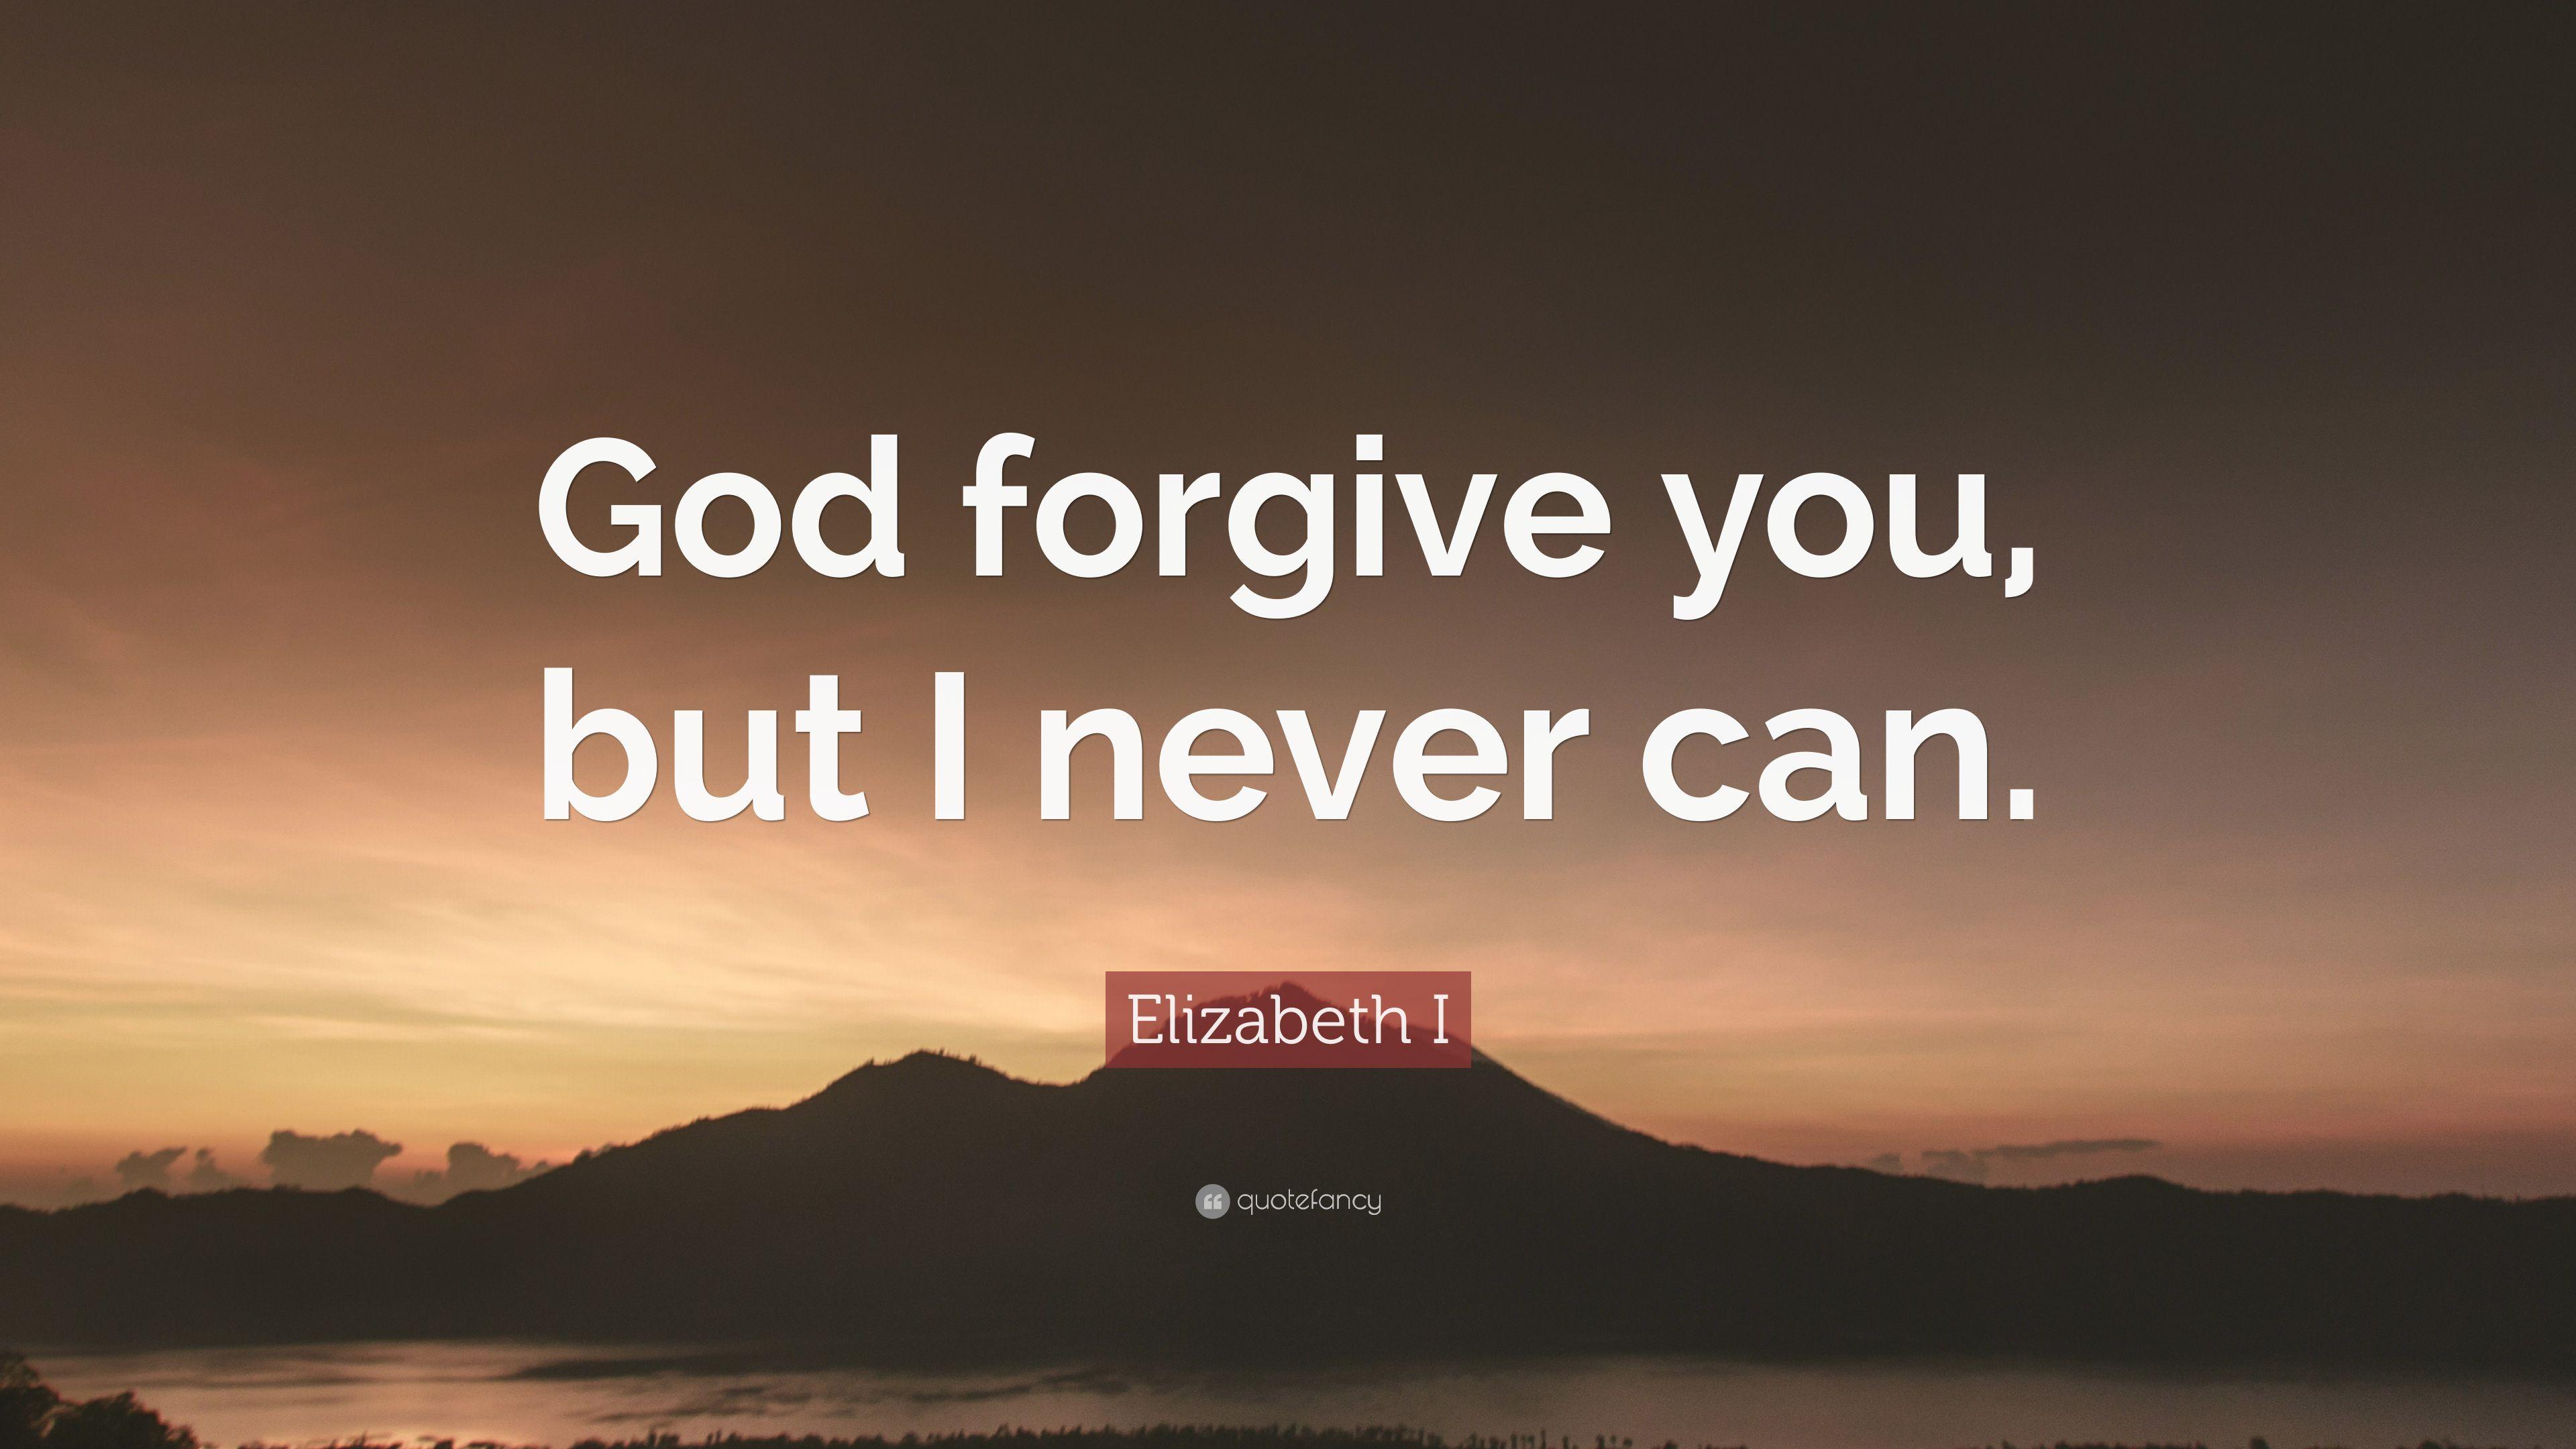 Elizabeth I Quote: “God forgive you, but I never can.” 7